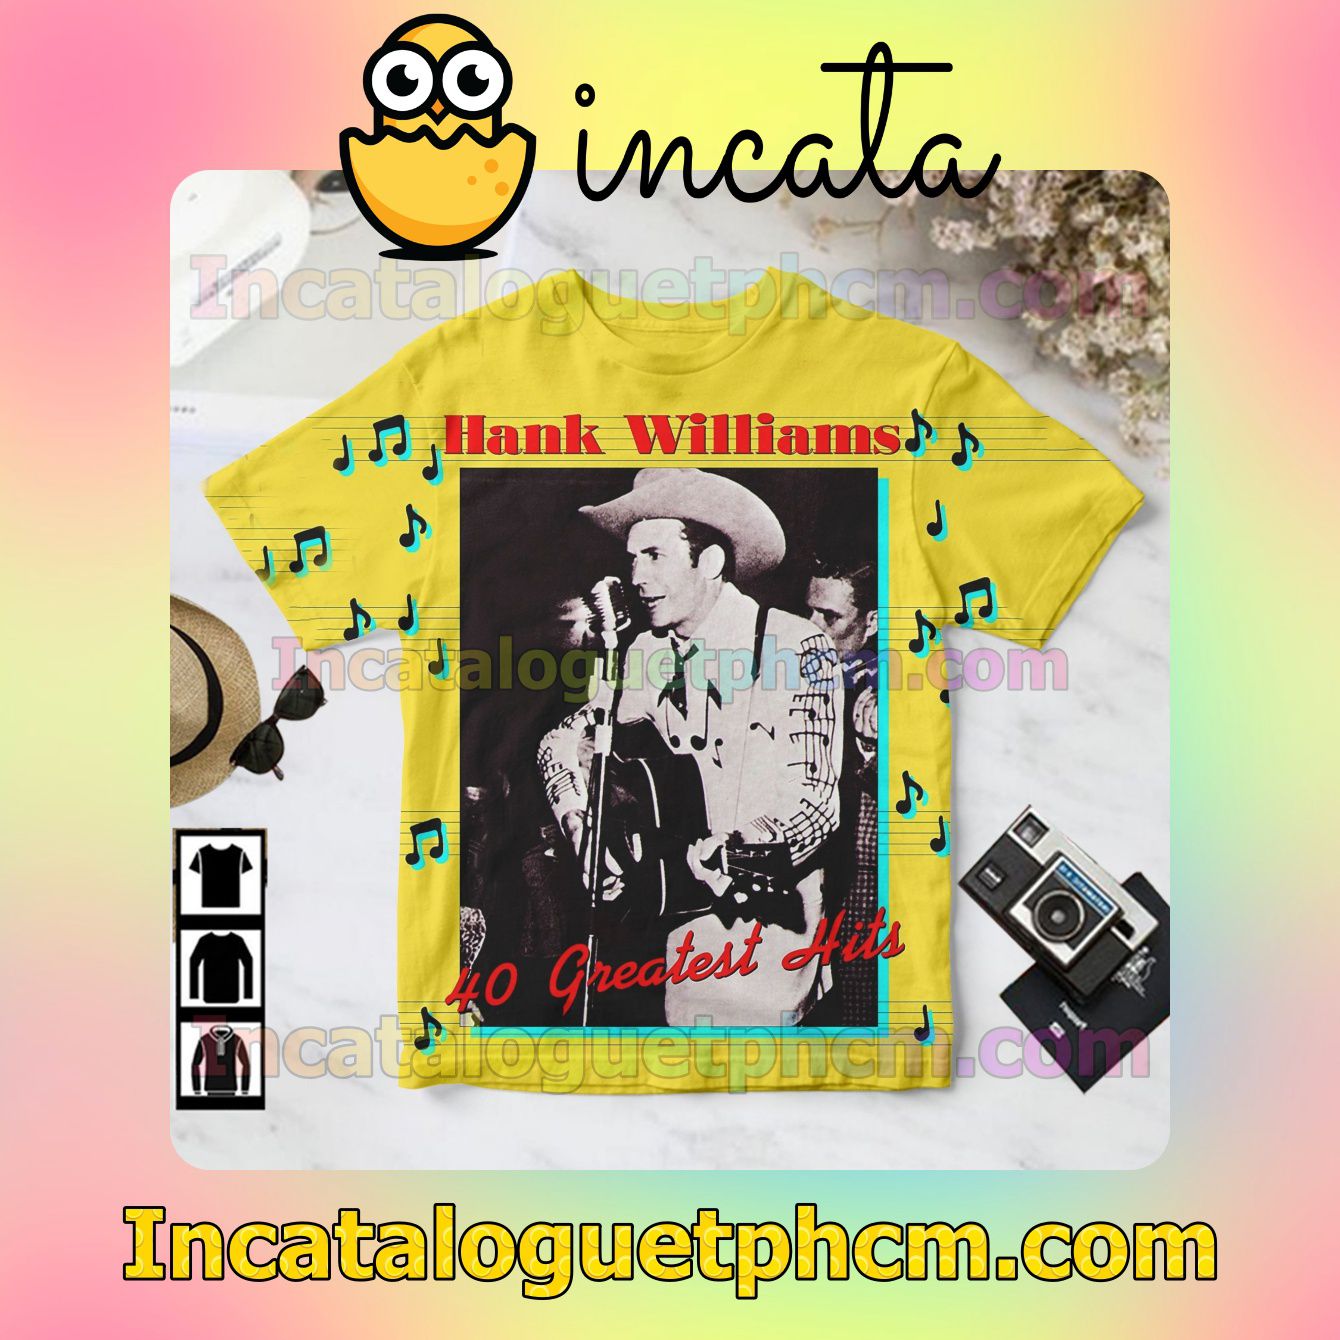 Hank Williams 40 Greatest Hits Album Cover Gift Shirt